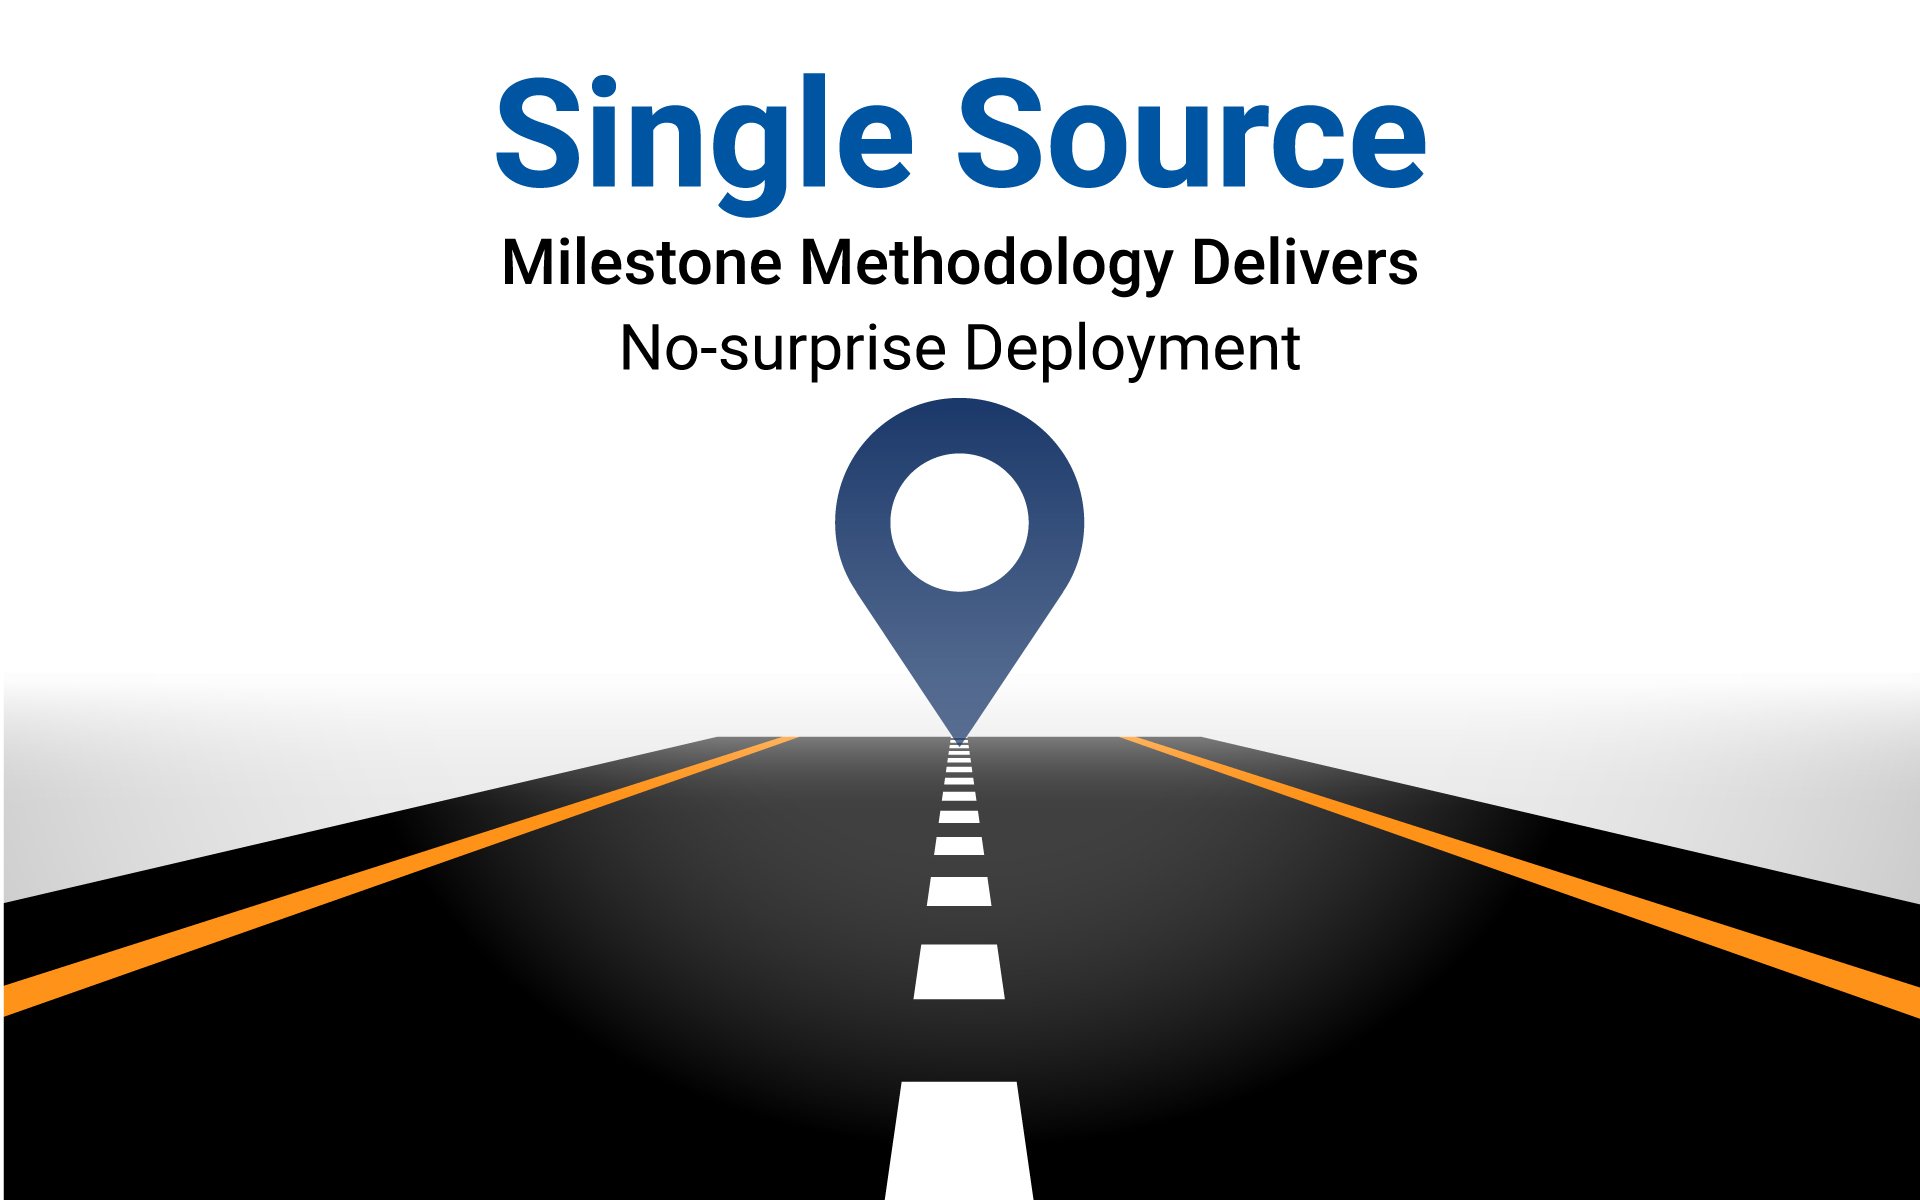 Single Source Milestone Methodology Delivers No-surprise Deployment